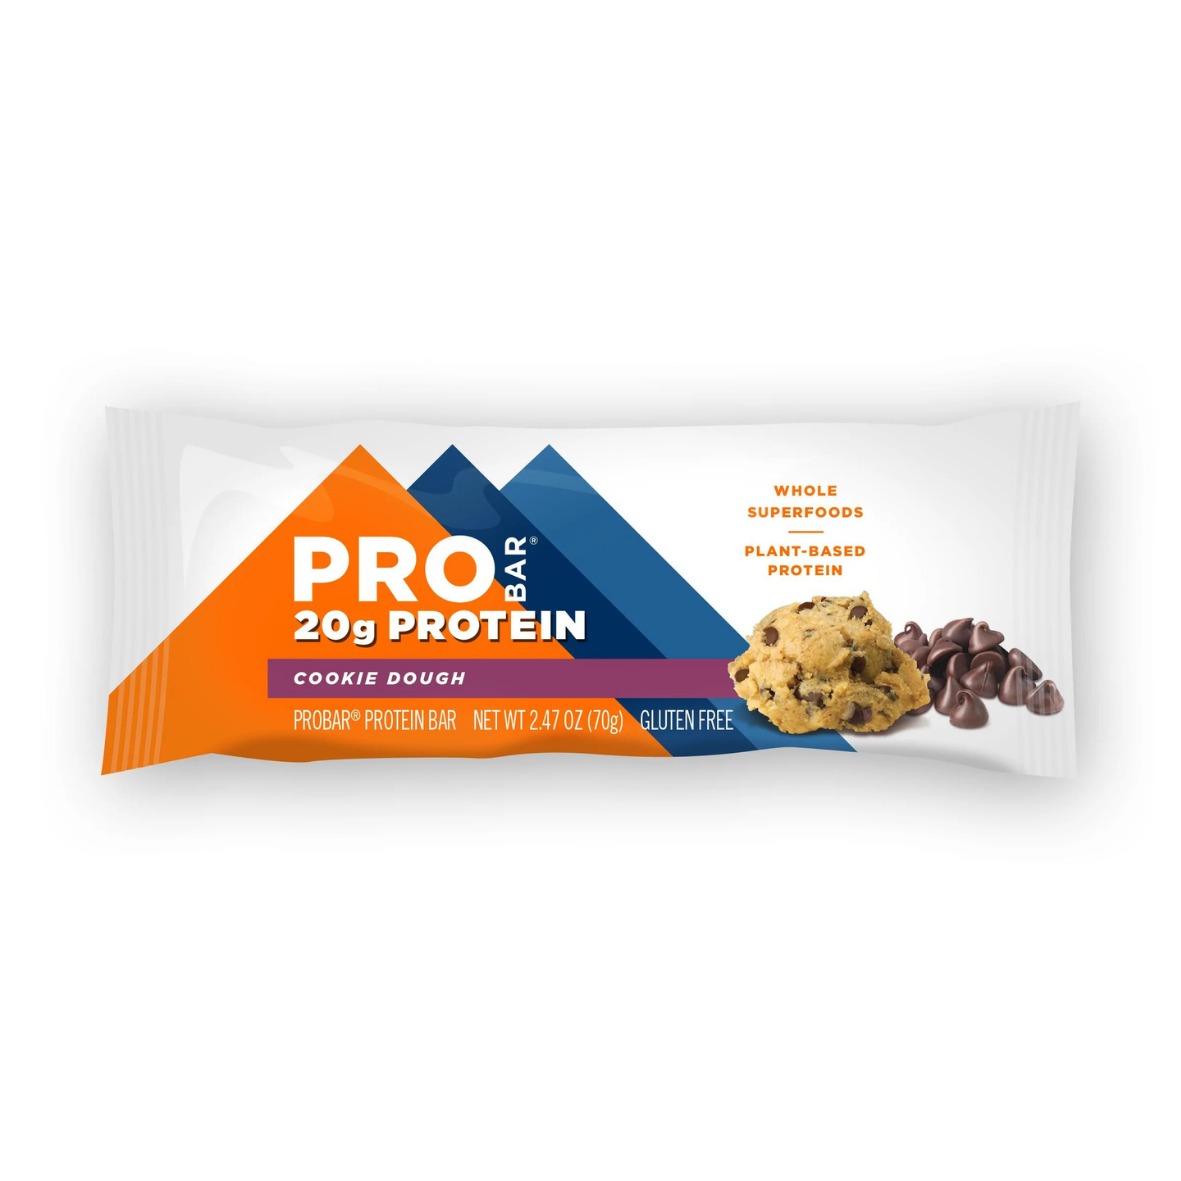 Probar Protein Bar in cookie dough flavour